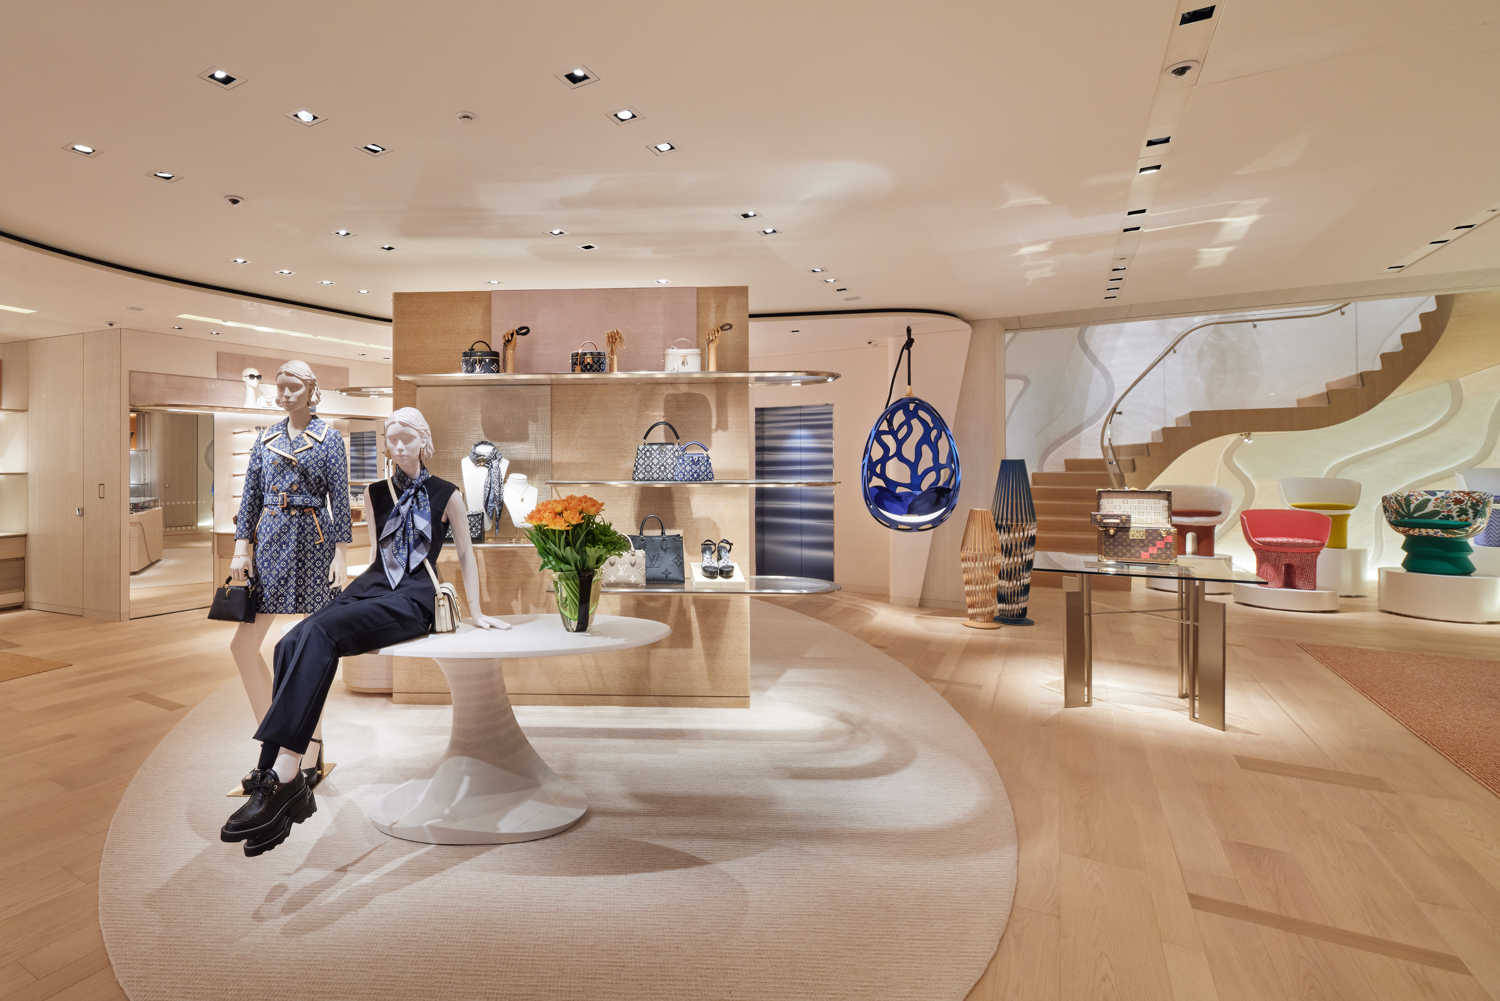 Louis Vuitton Ginza Store Cancelled – Tokyo Fashion